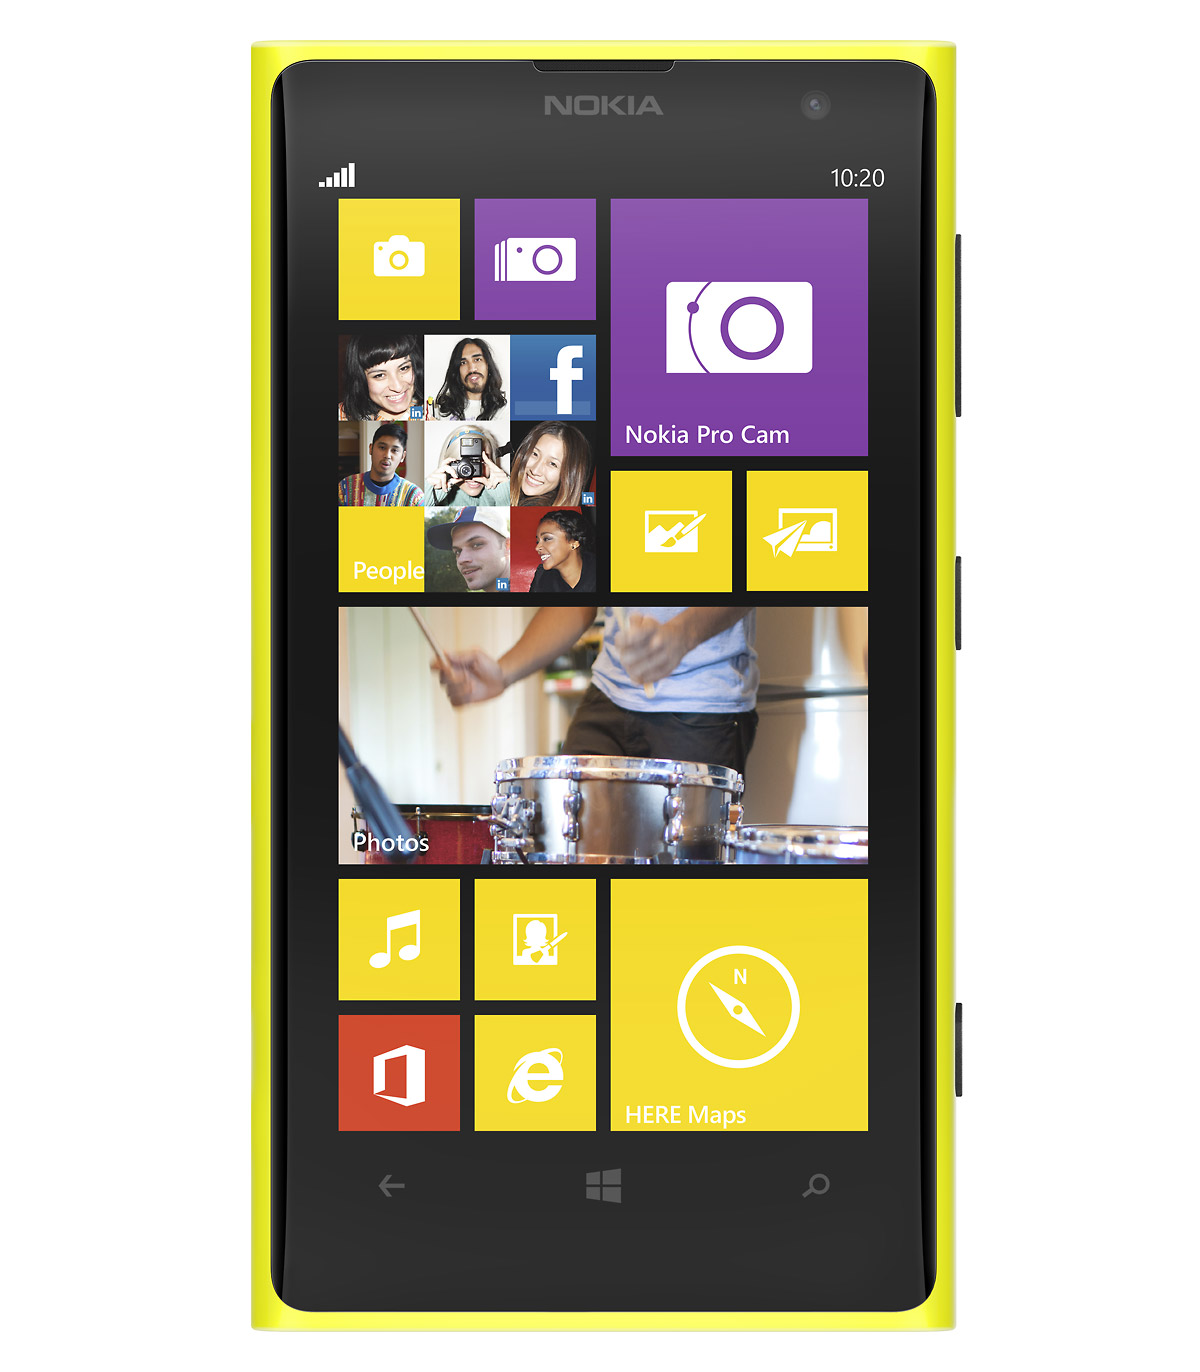 Nokia 1020 Smart Phone - Windows Phone 8 OS